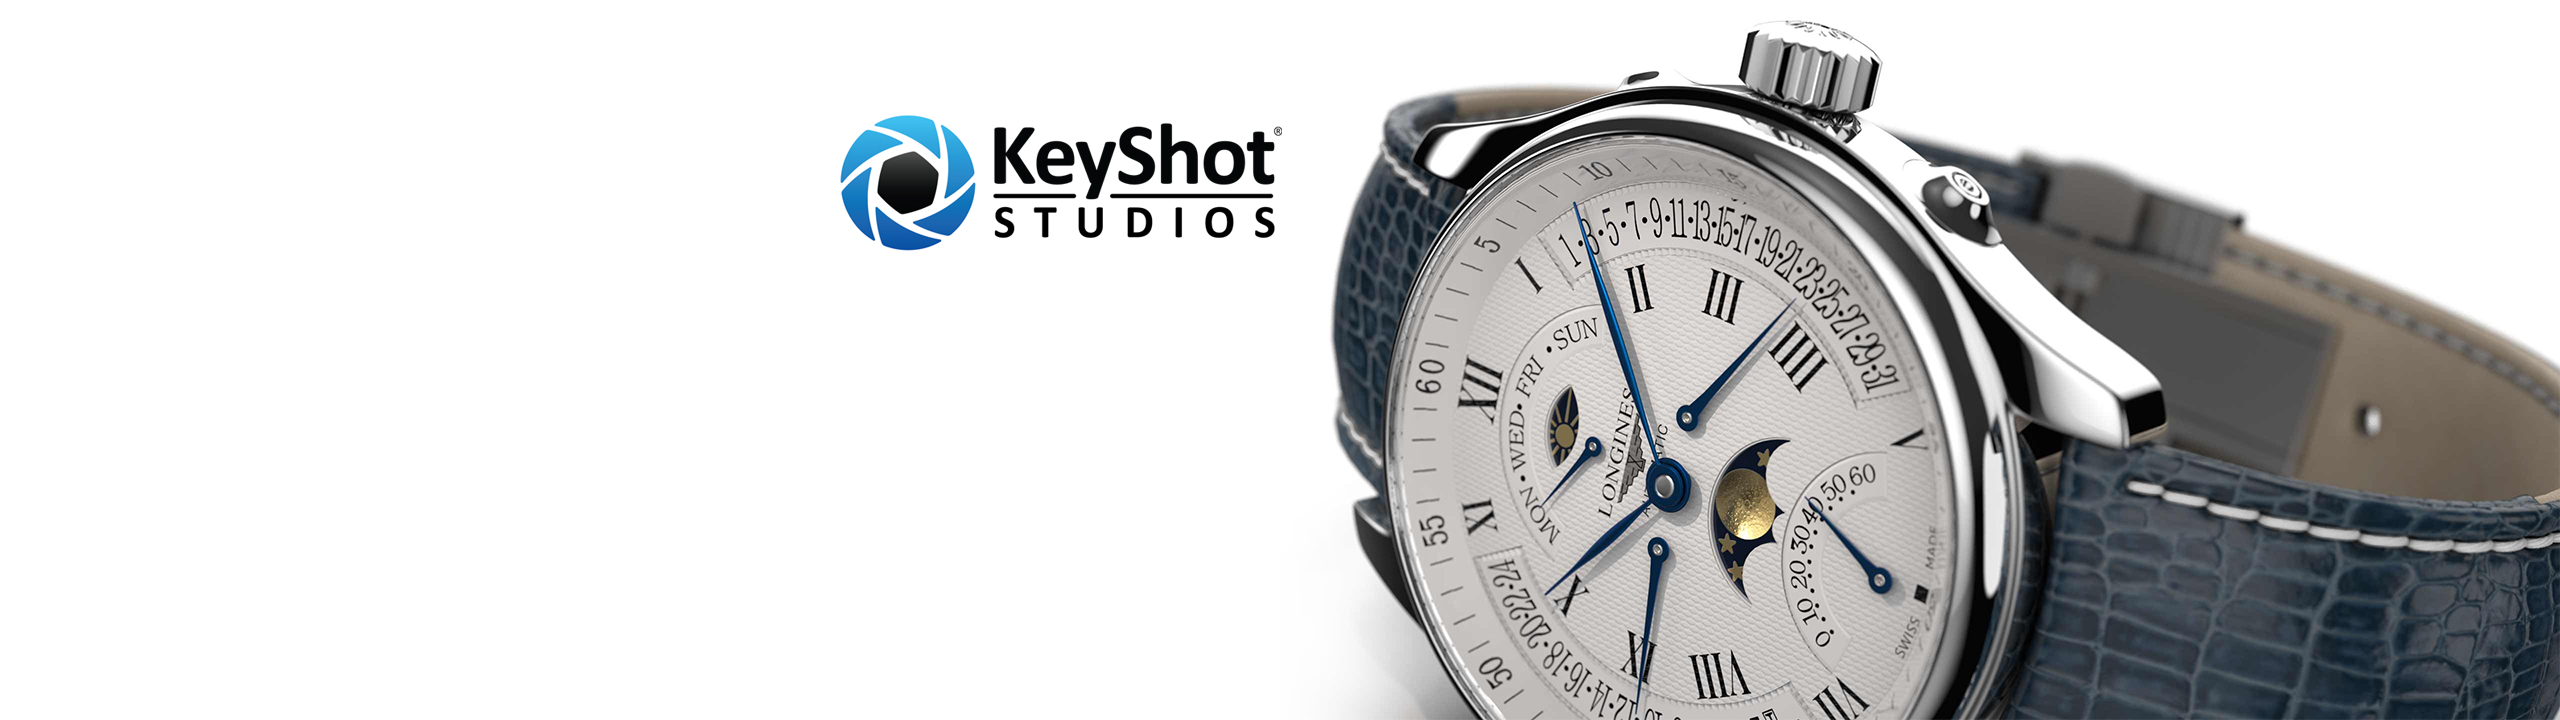 KeyShot Studios – Your KeyShot Rendering Service